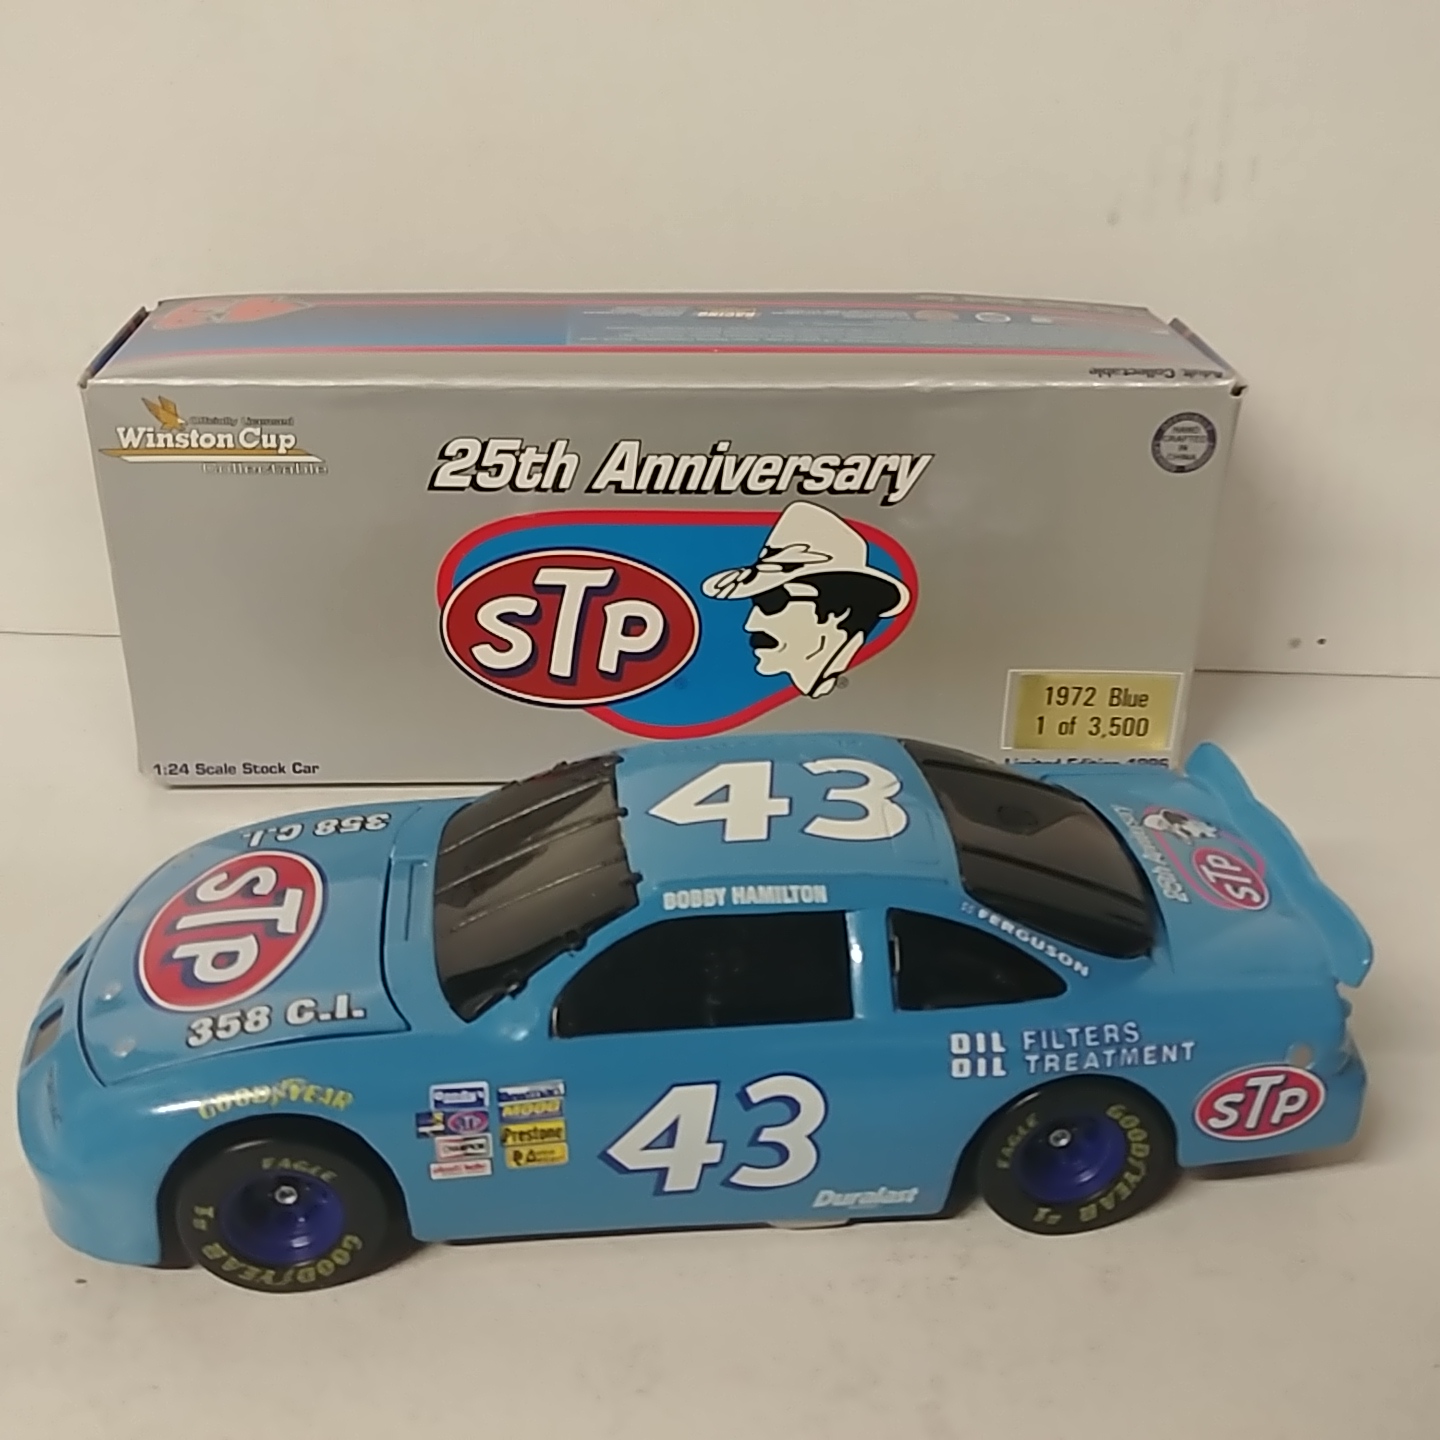 1996 Bobby Hamilton 1/24th STP "Petty 1972 Blue" b/w car